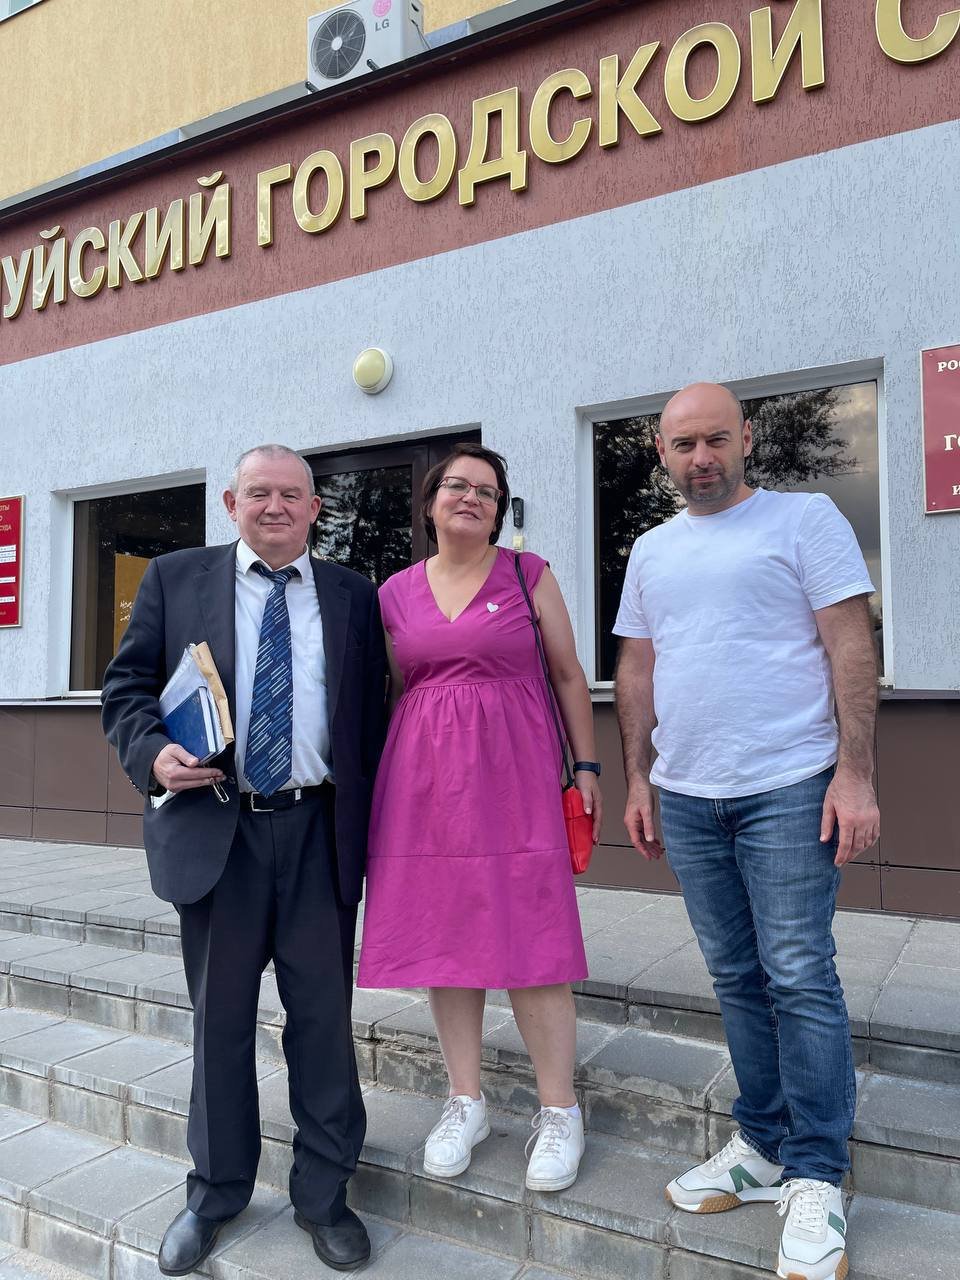 Галямина, Веселов и адвокат Черджиев. Фото: Галямина/Telegram